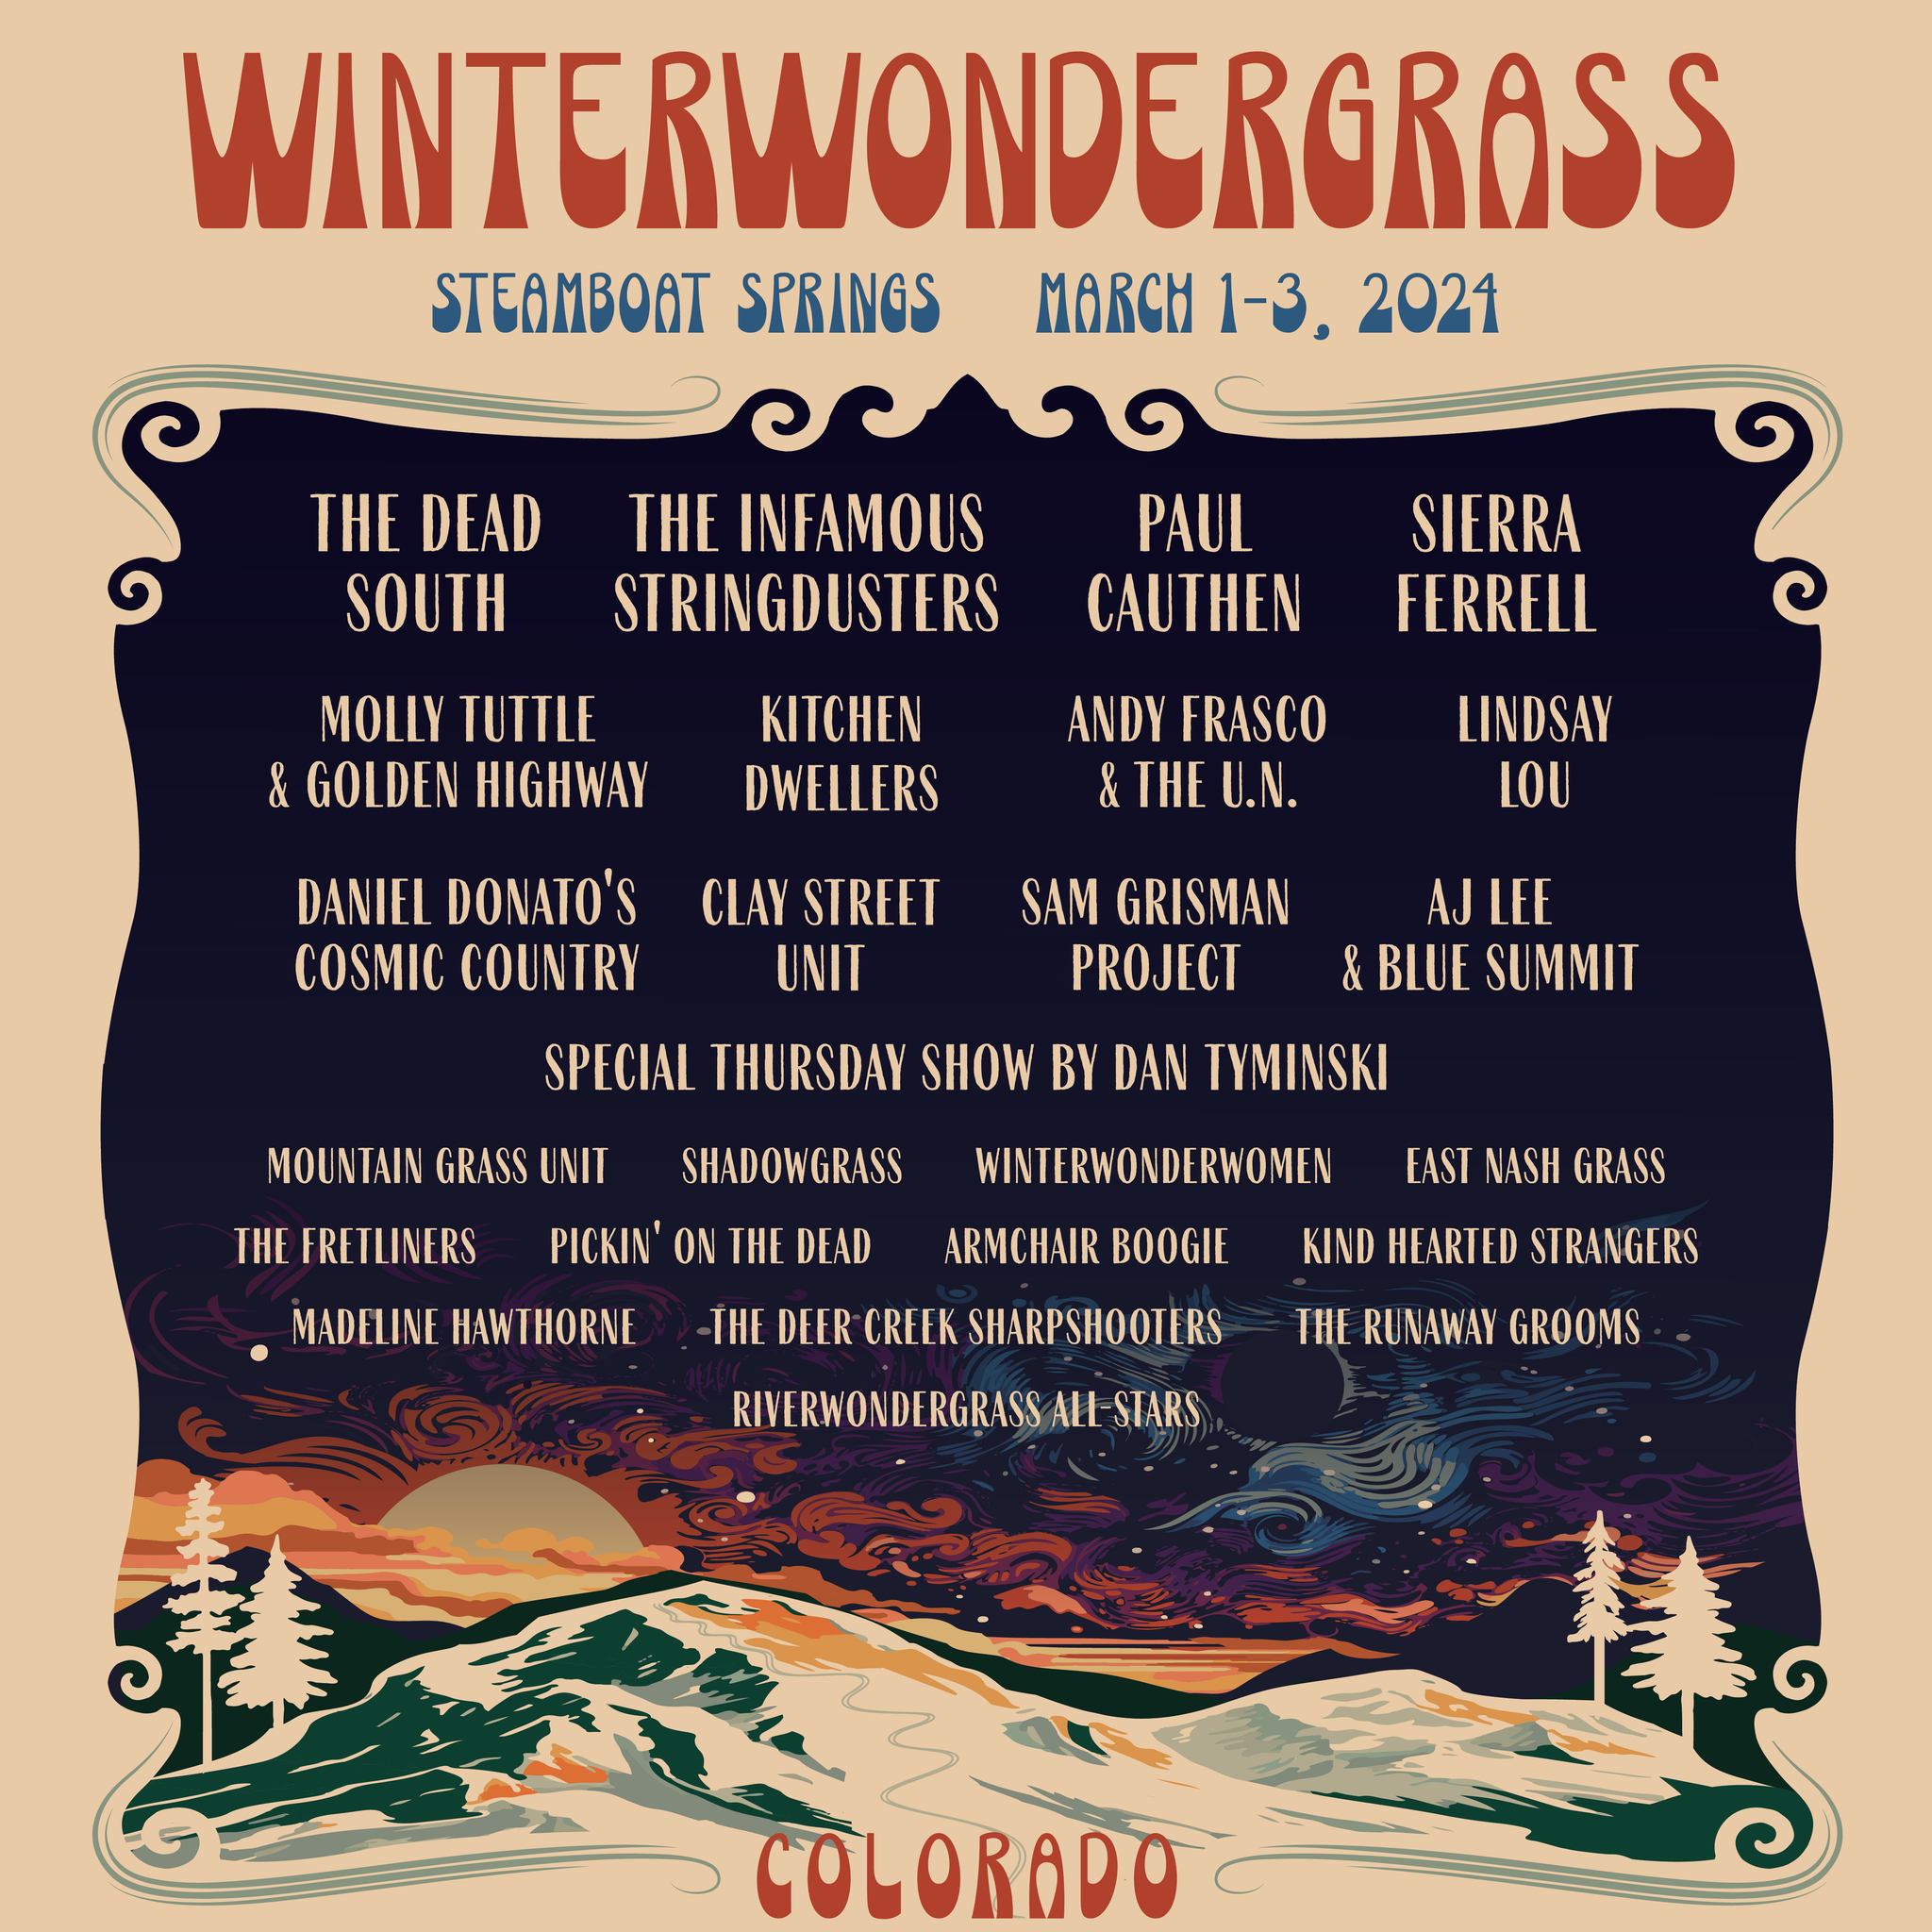 WinterWonderGrass Steamboat lineup poster